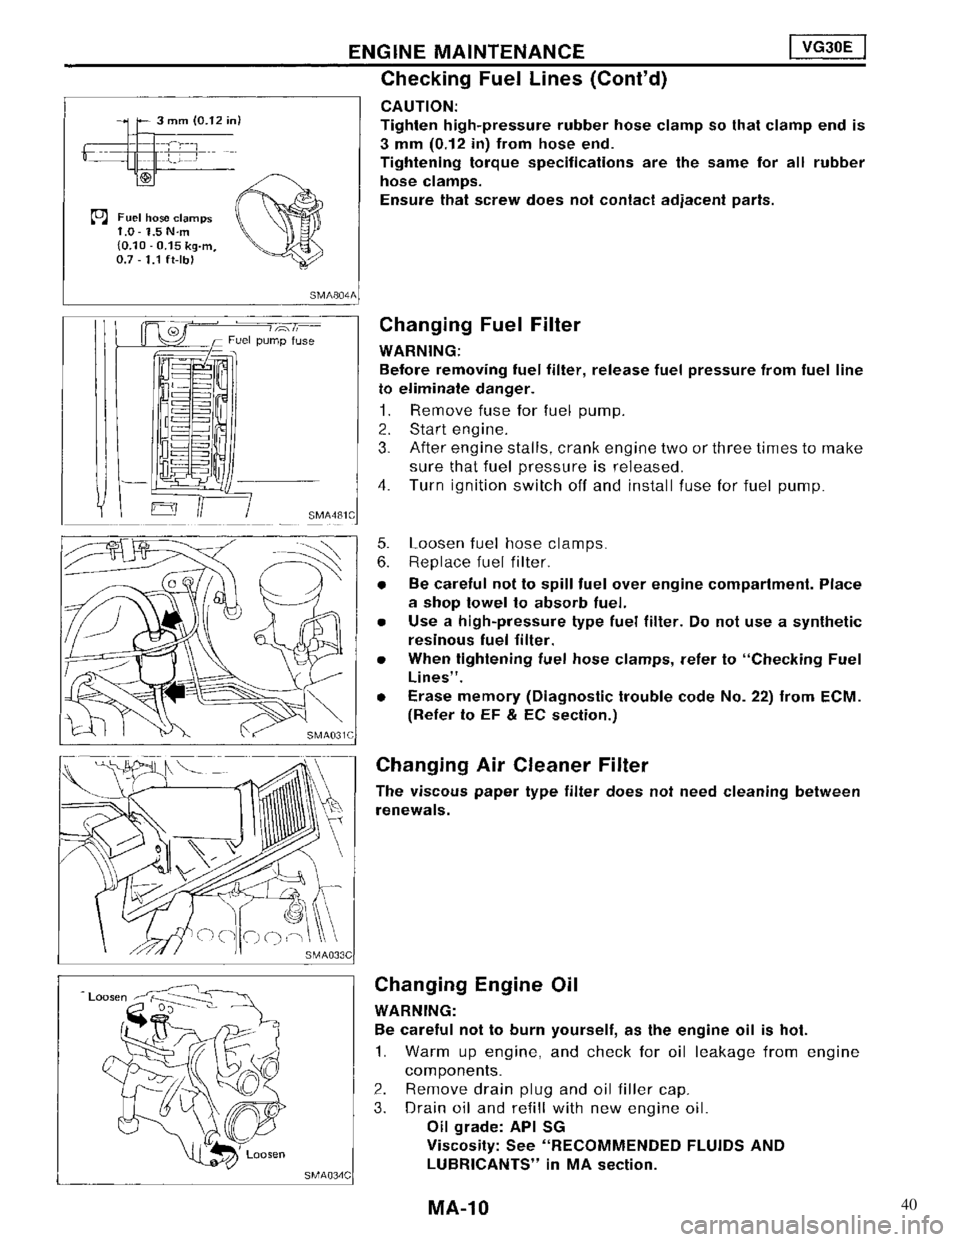 NISSAN MAXIMA 1994 A32 / 4.G Maintenance Workshop Manual 40 